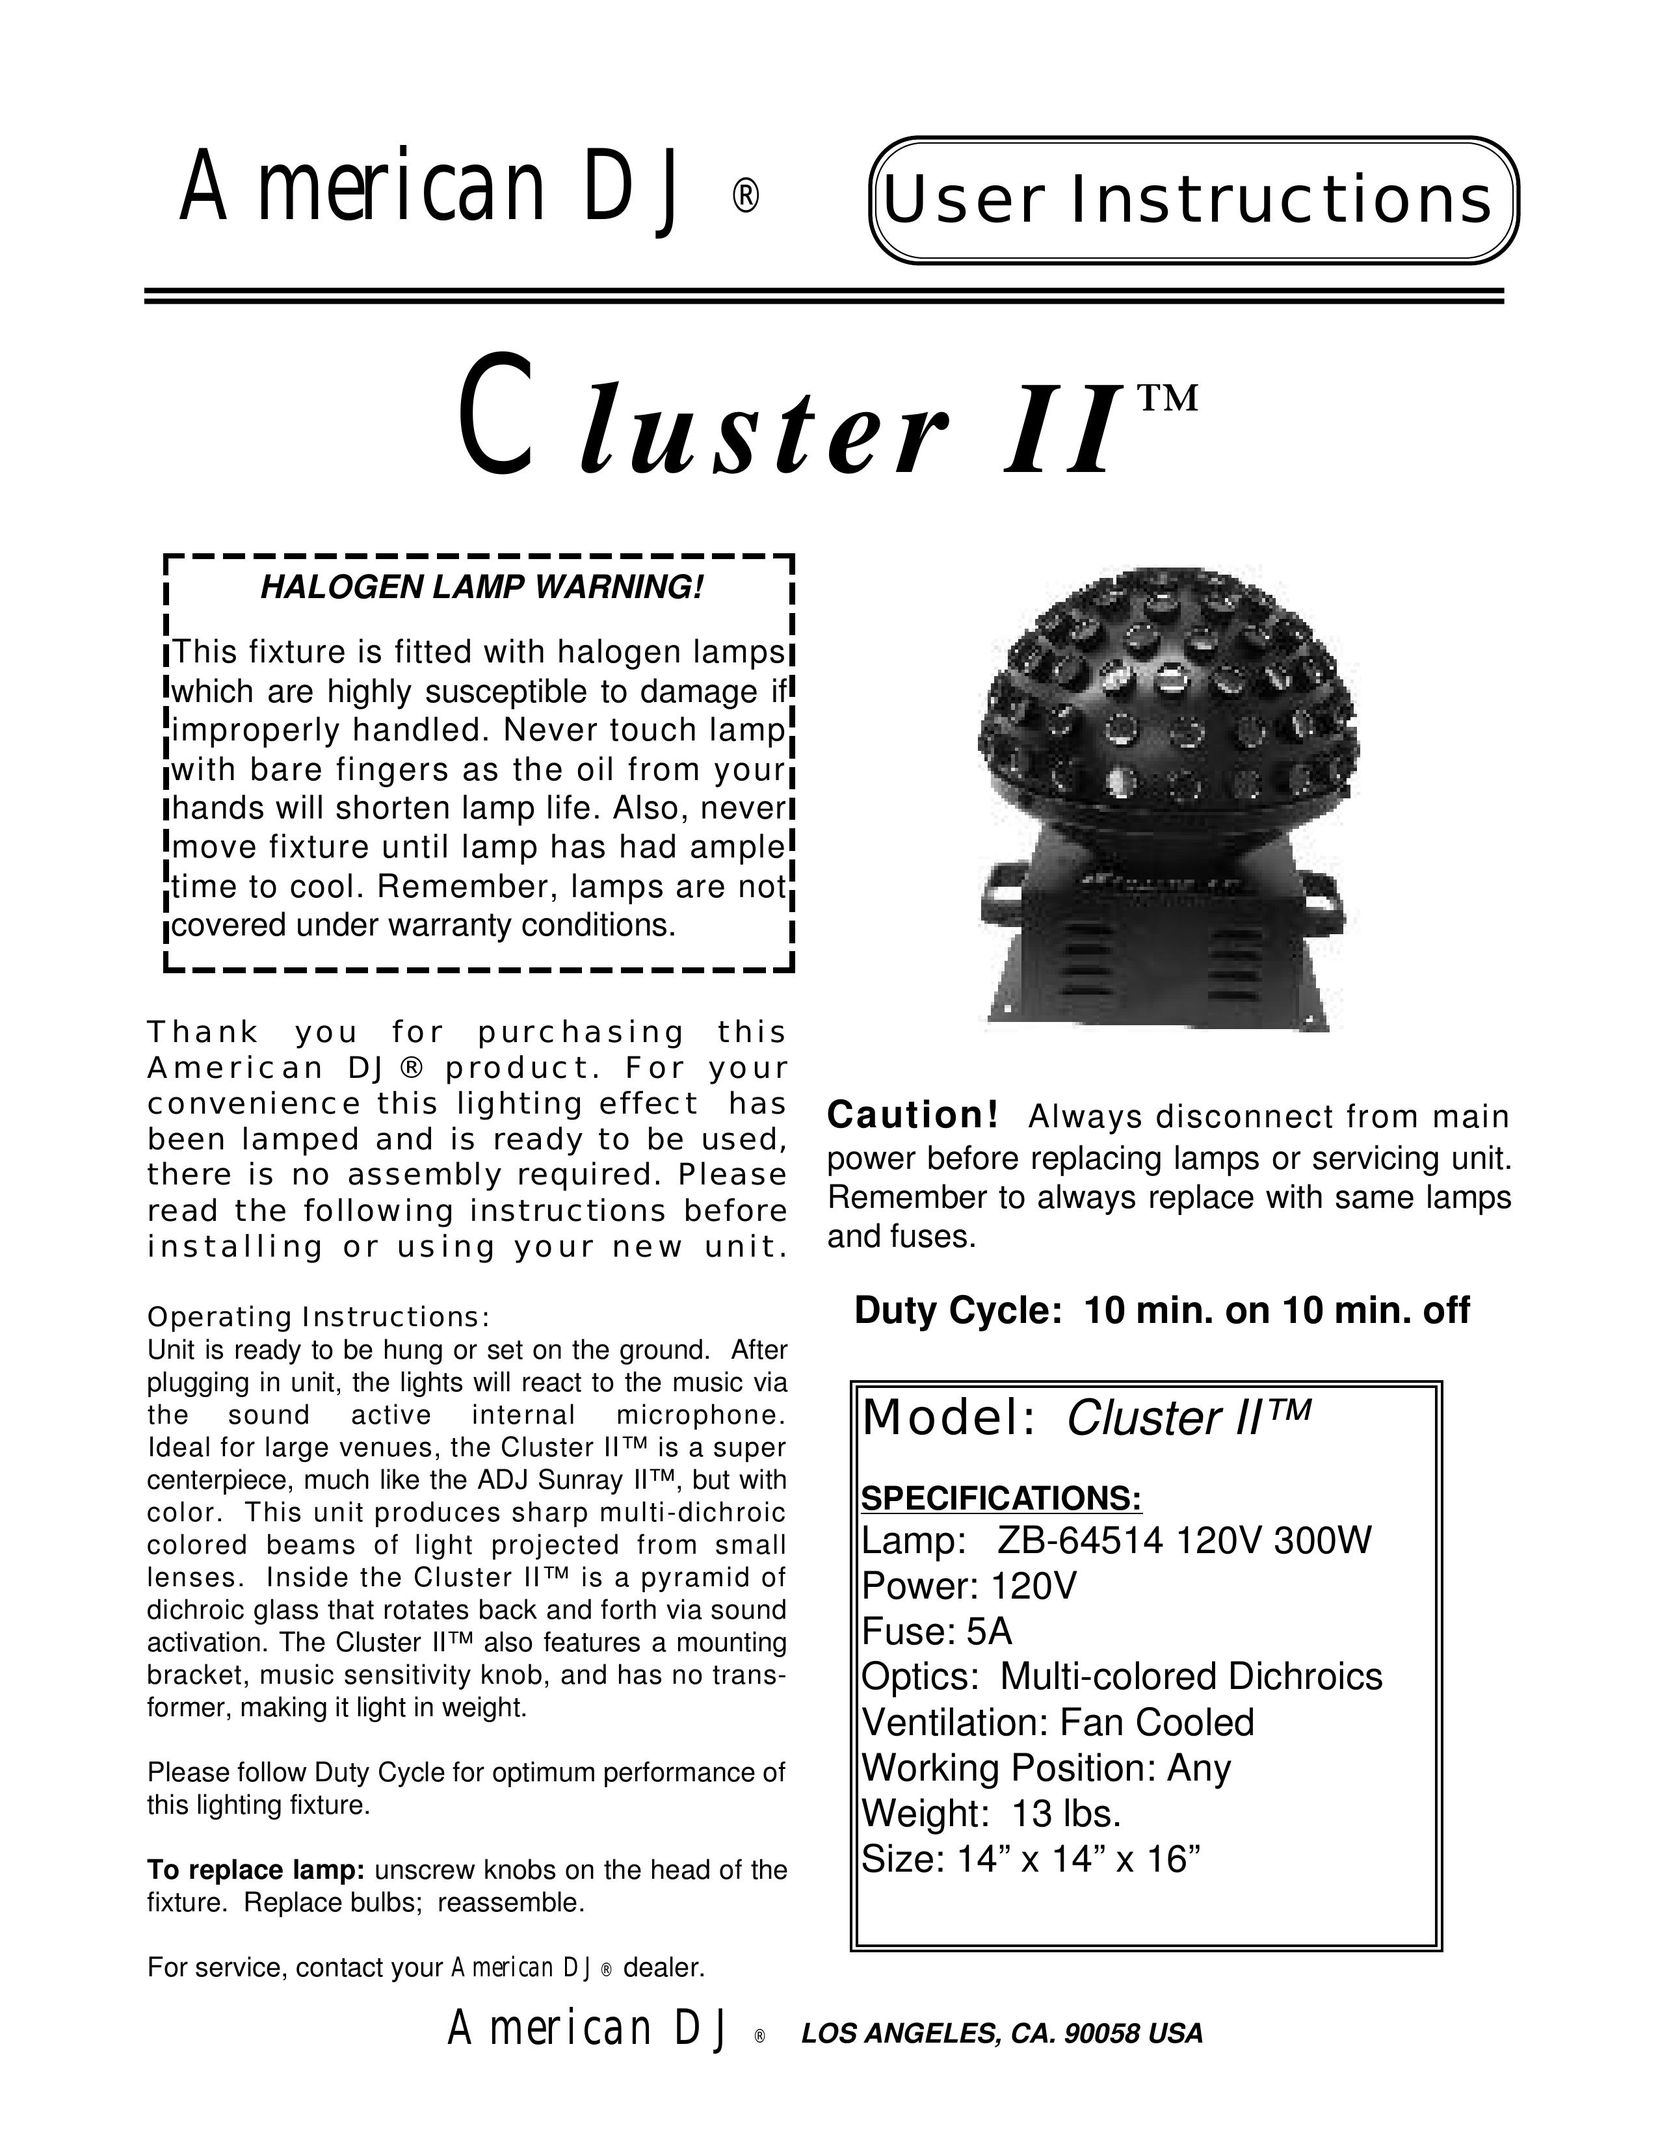 American DJ Cluster II Indoor Furnishings User Manual